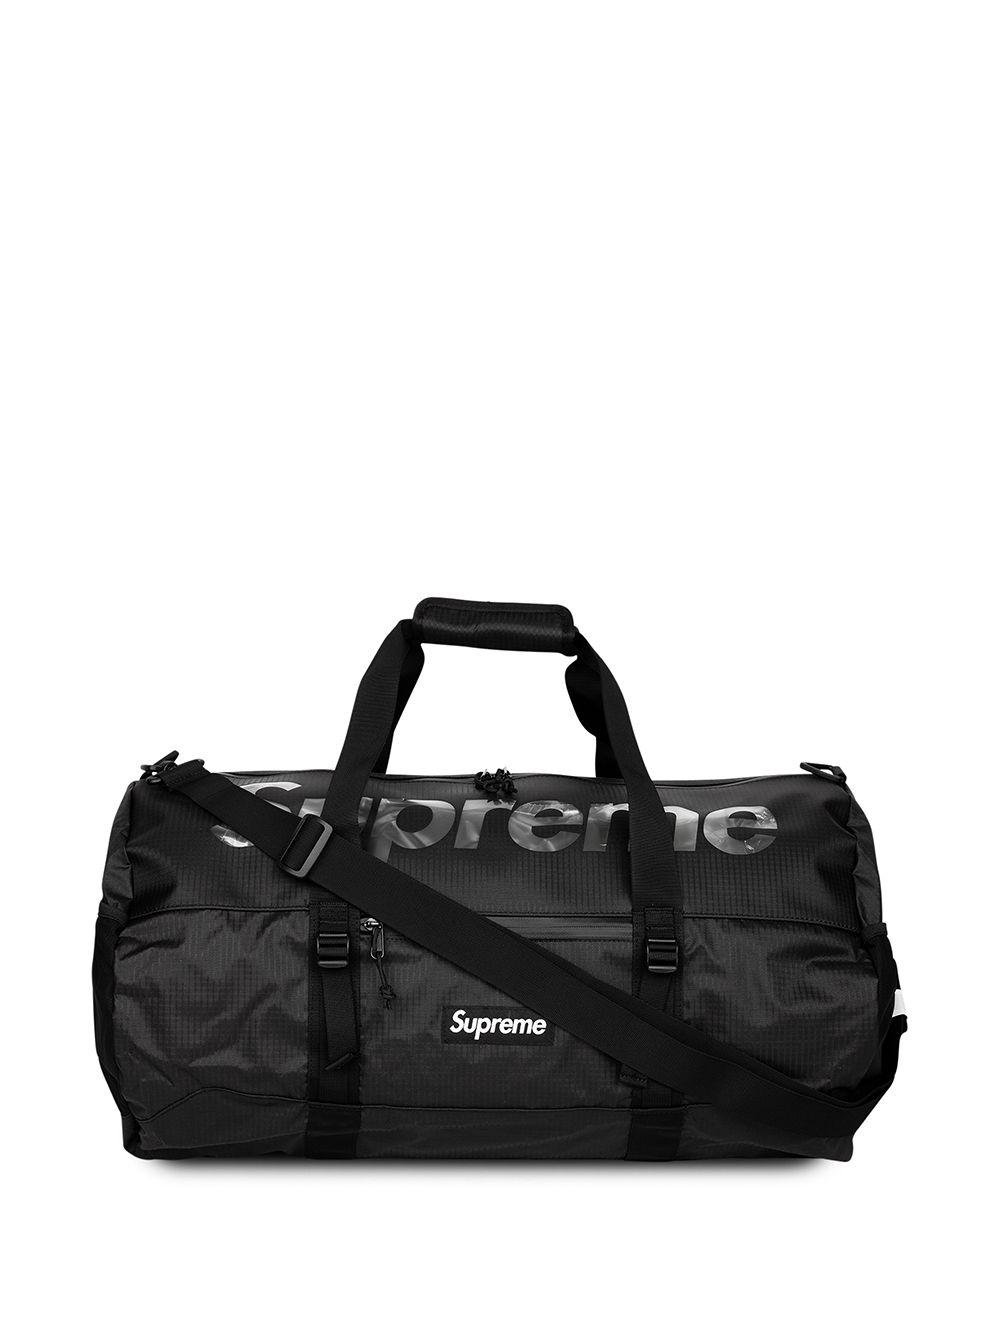 Supreme Black Travel Bags